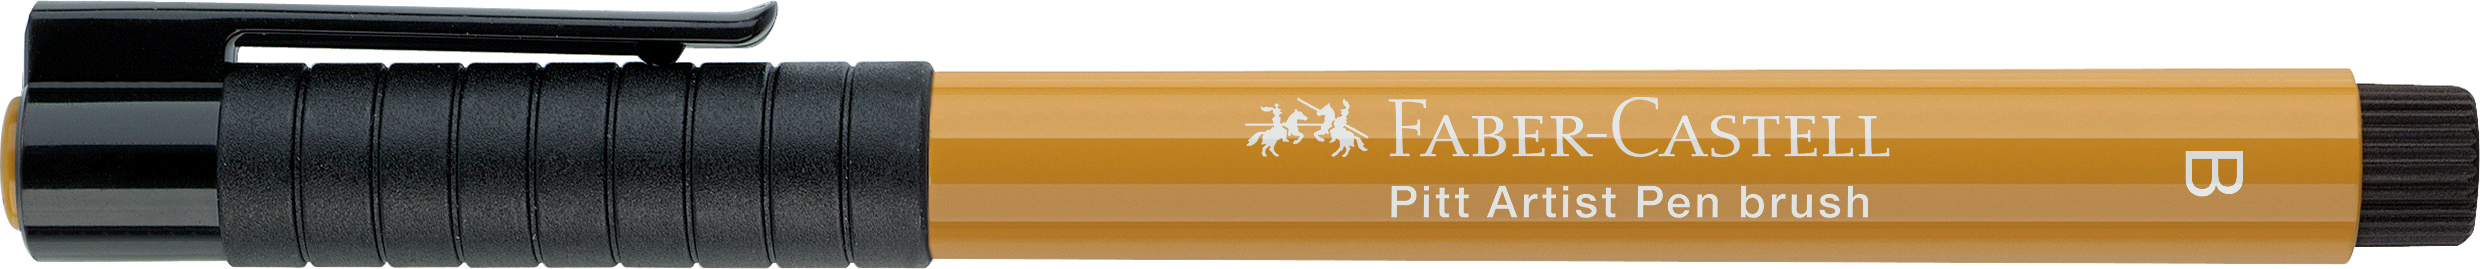 FABER-CASTELL Pitt Artist Pen Brush 2.5mm 167468 green gold